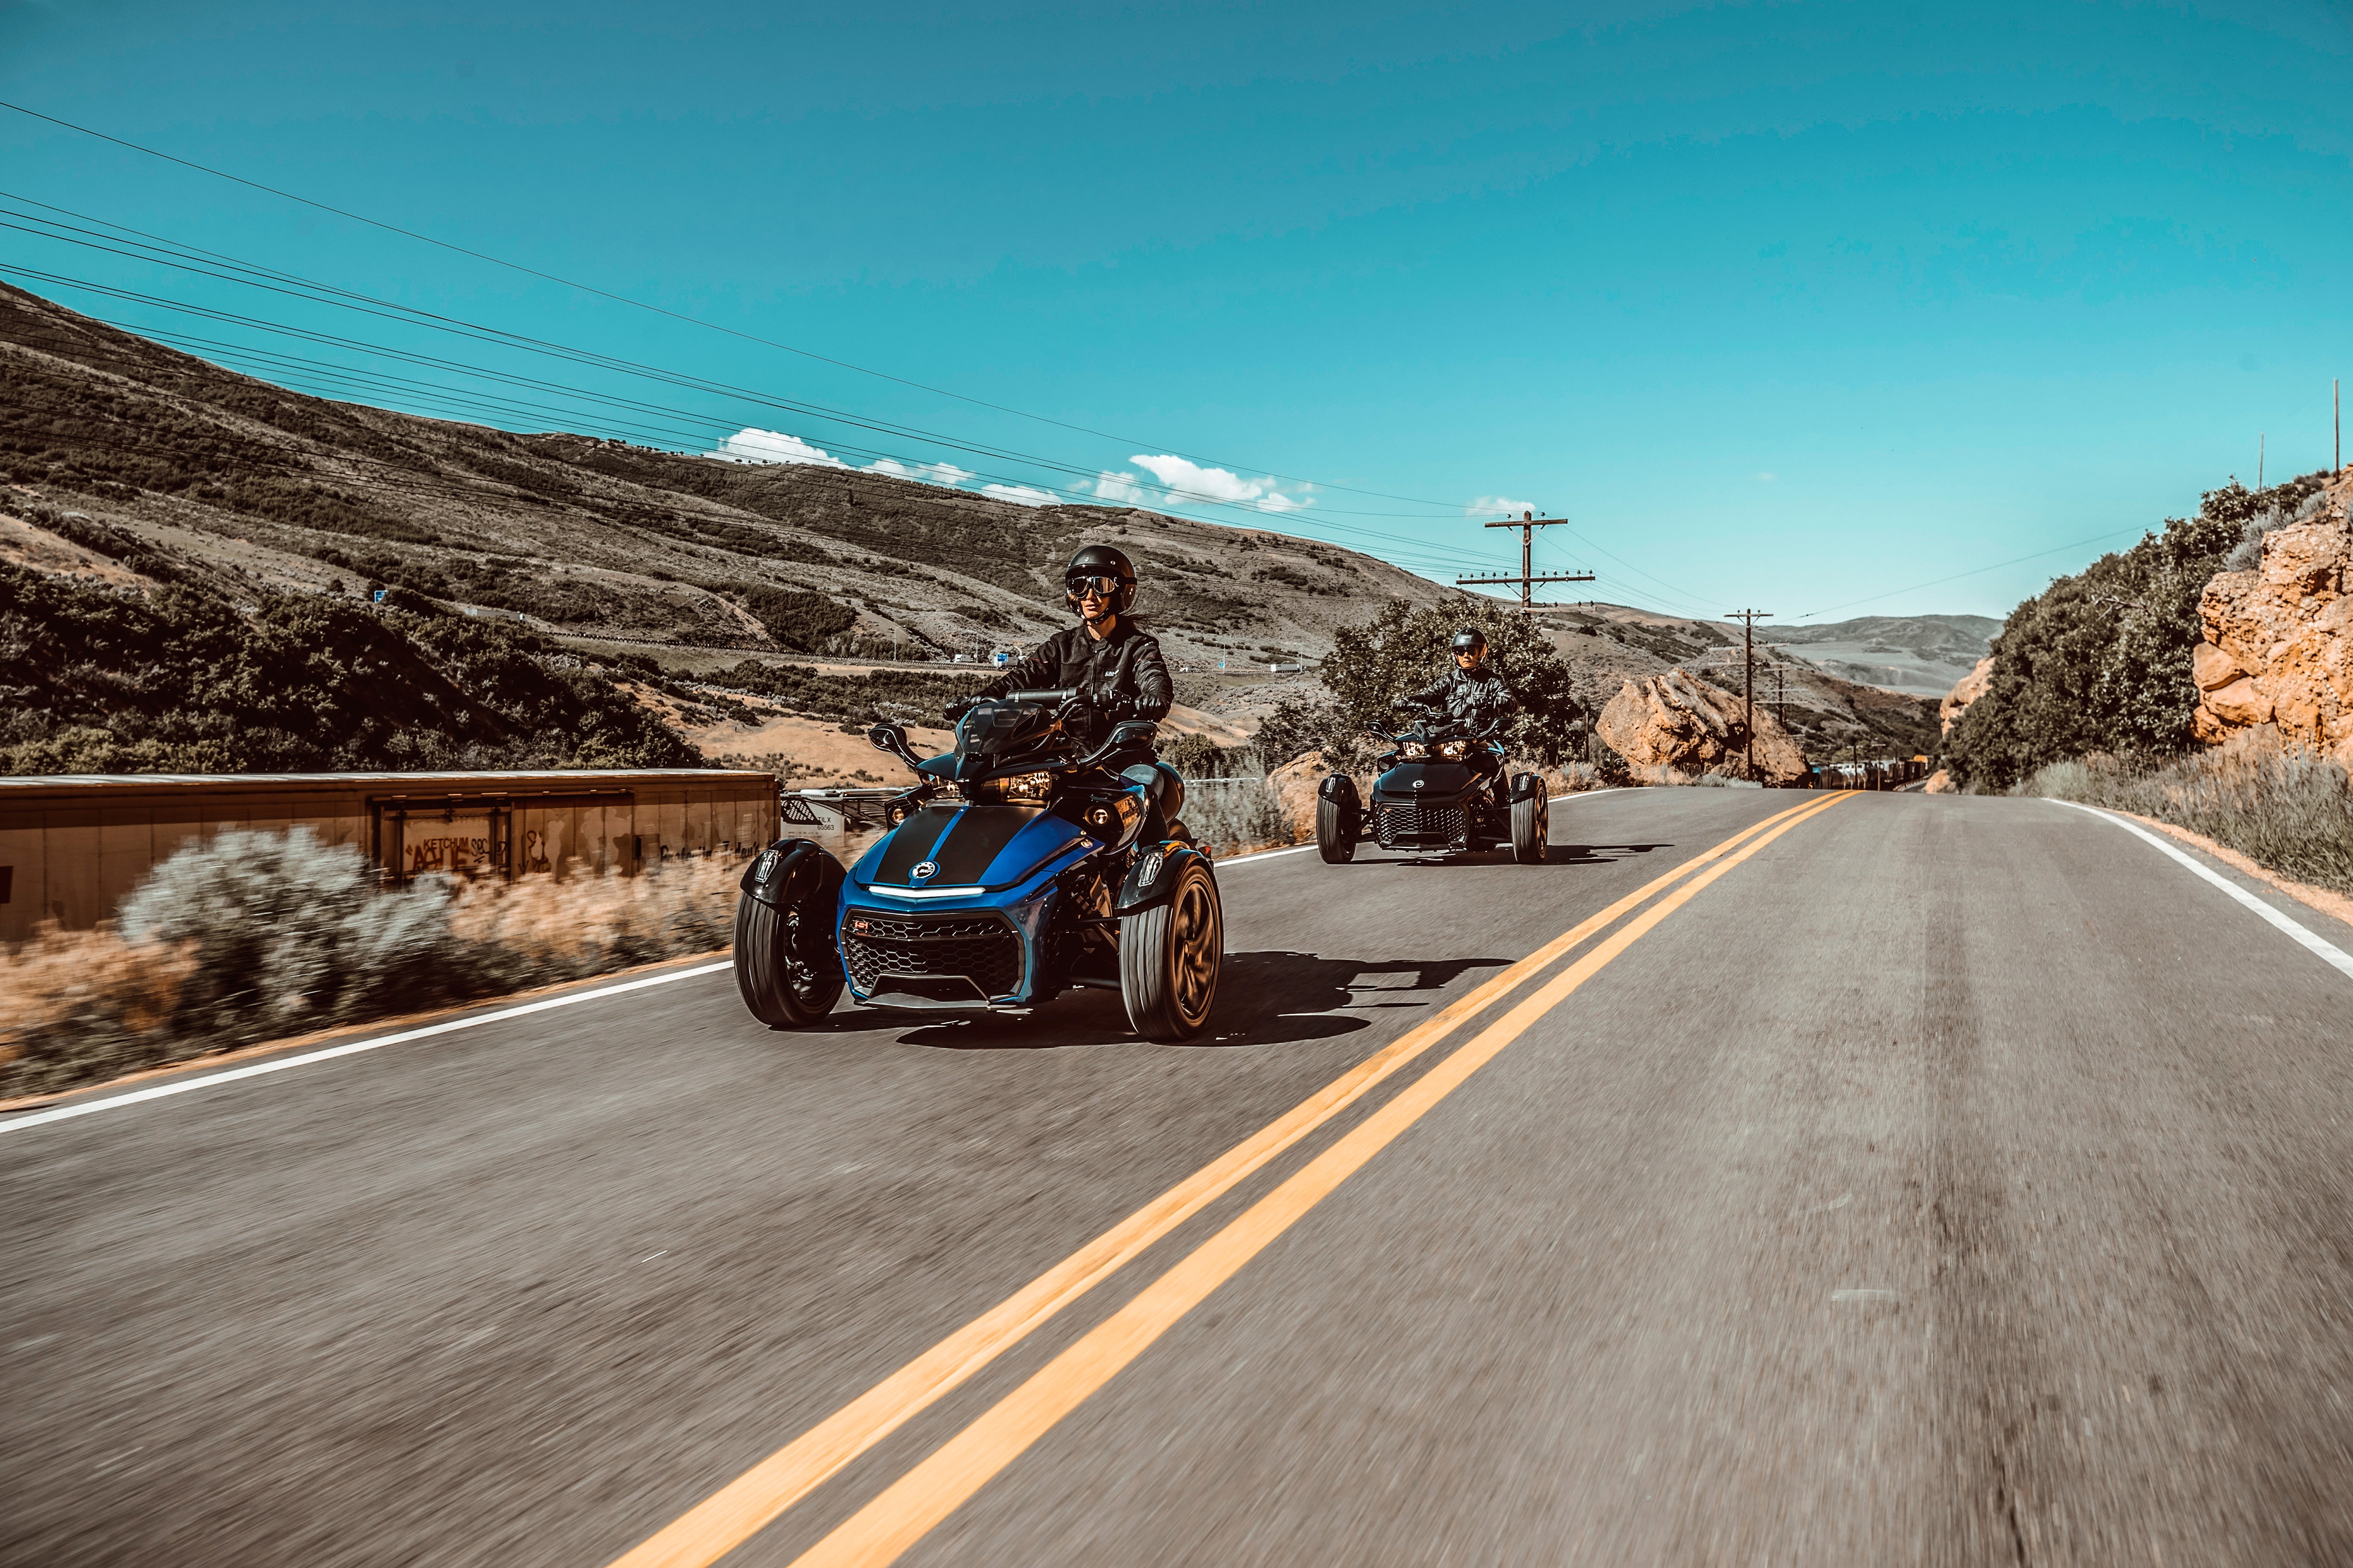 Amigos pilotando na estrada seus veículos Can-Am Spyder